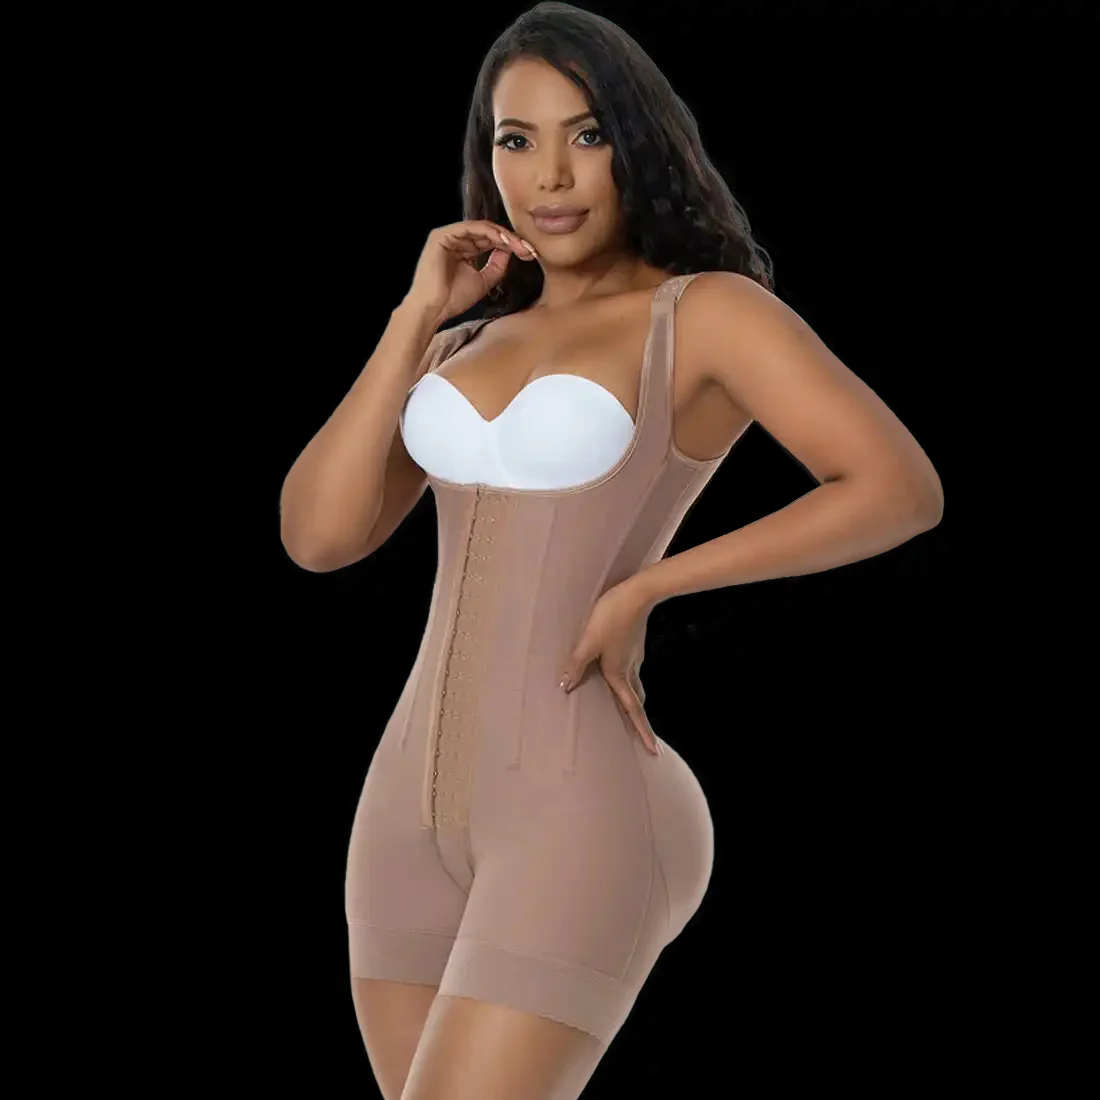 Watch One Woman Get A Transformational Brazilian Butt Lift in Miami